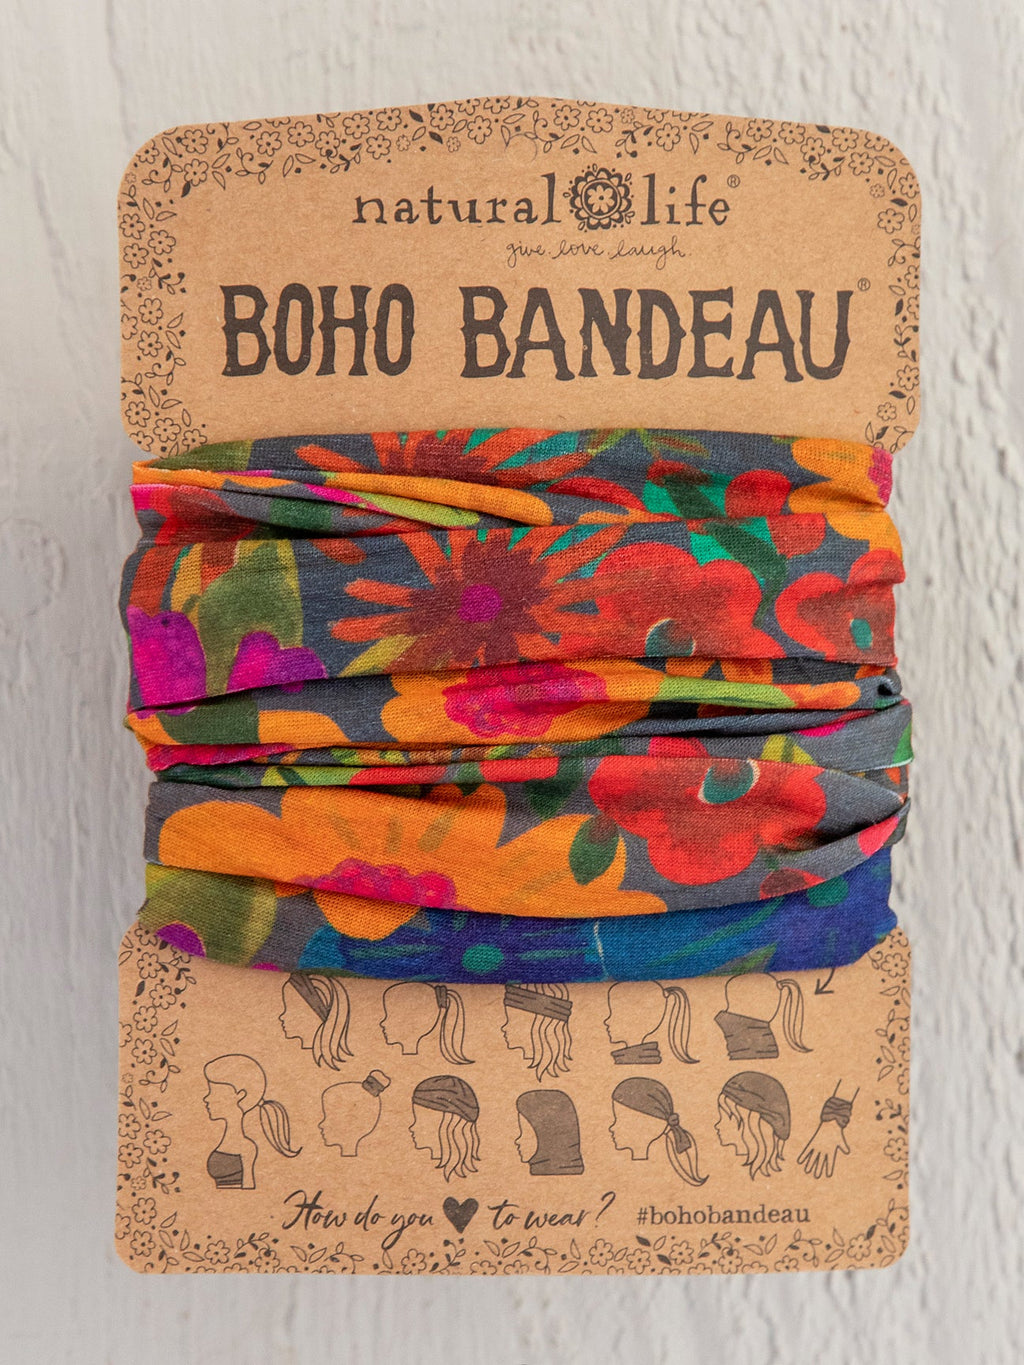 Boho Bandeau in Orange Pink Floral Print by Natural Life